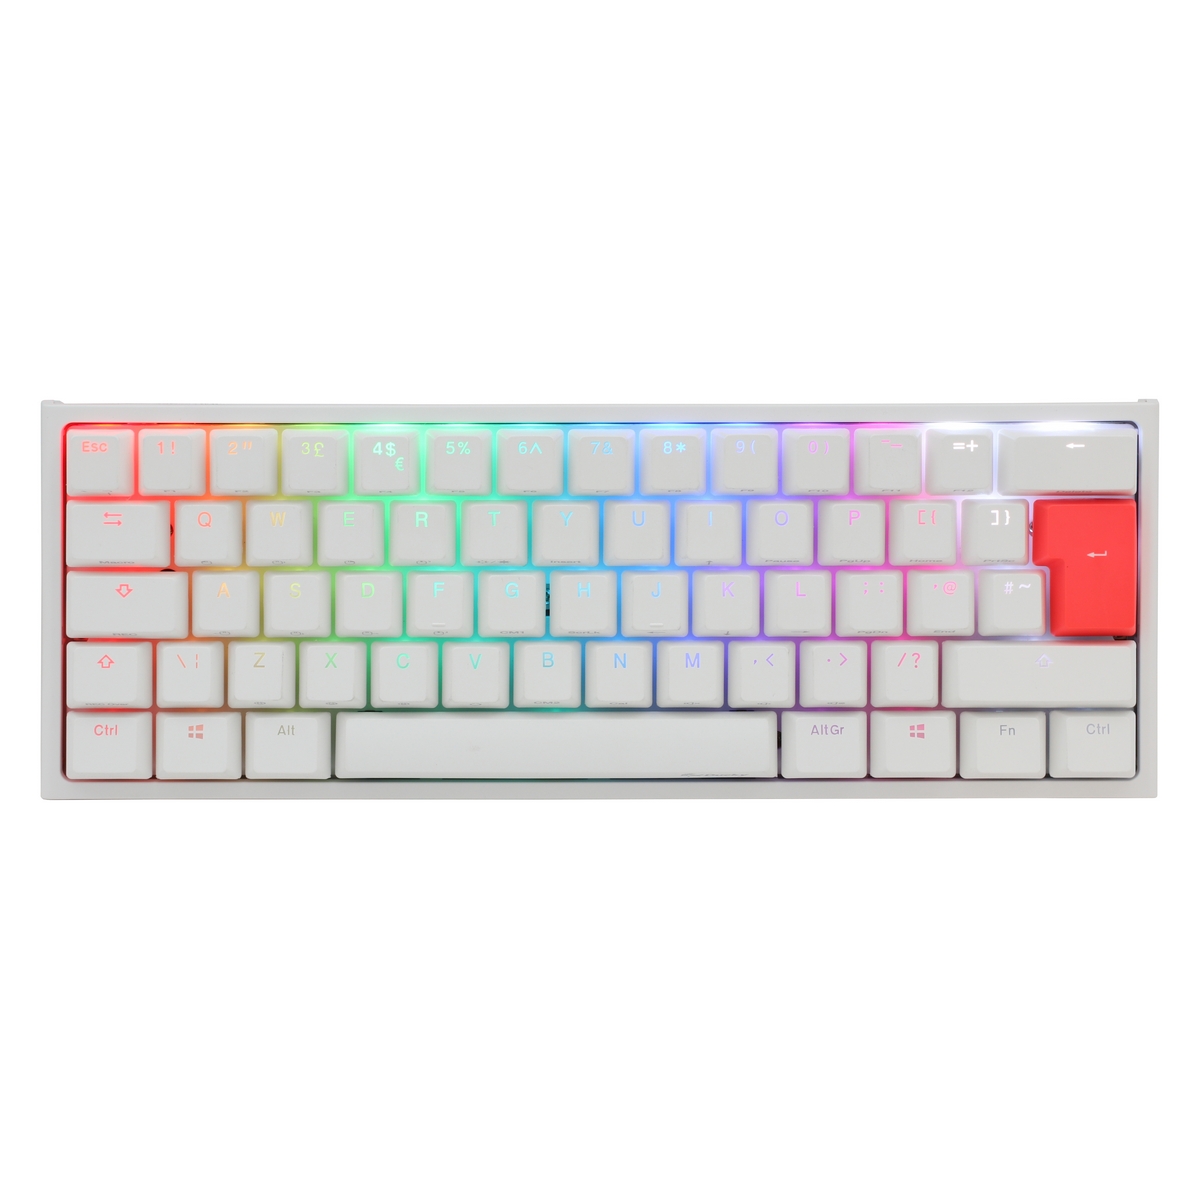 Ducky - Ducky One 2 Mini 60% White Frame RGB USB Mechanical Gaming Keyboard Brown Cherry MX Switch UK Layout